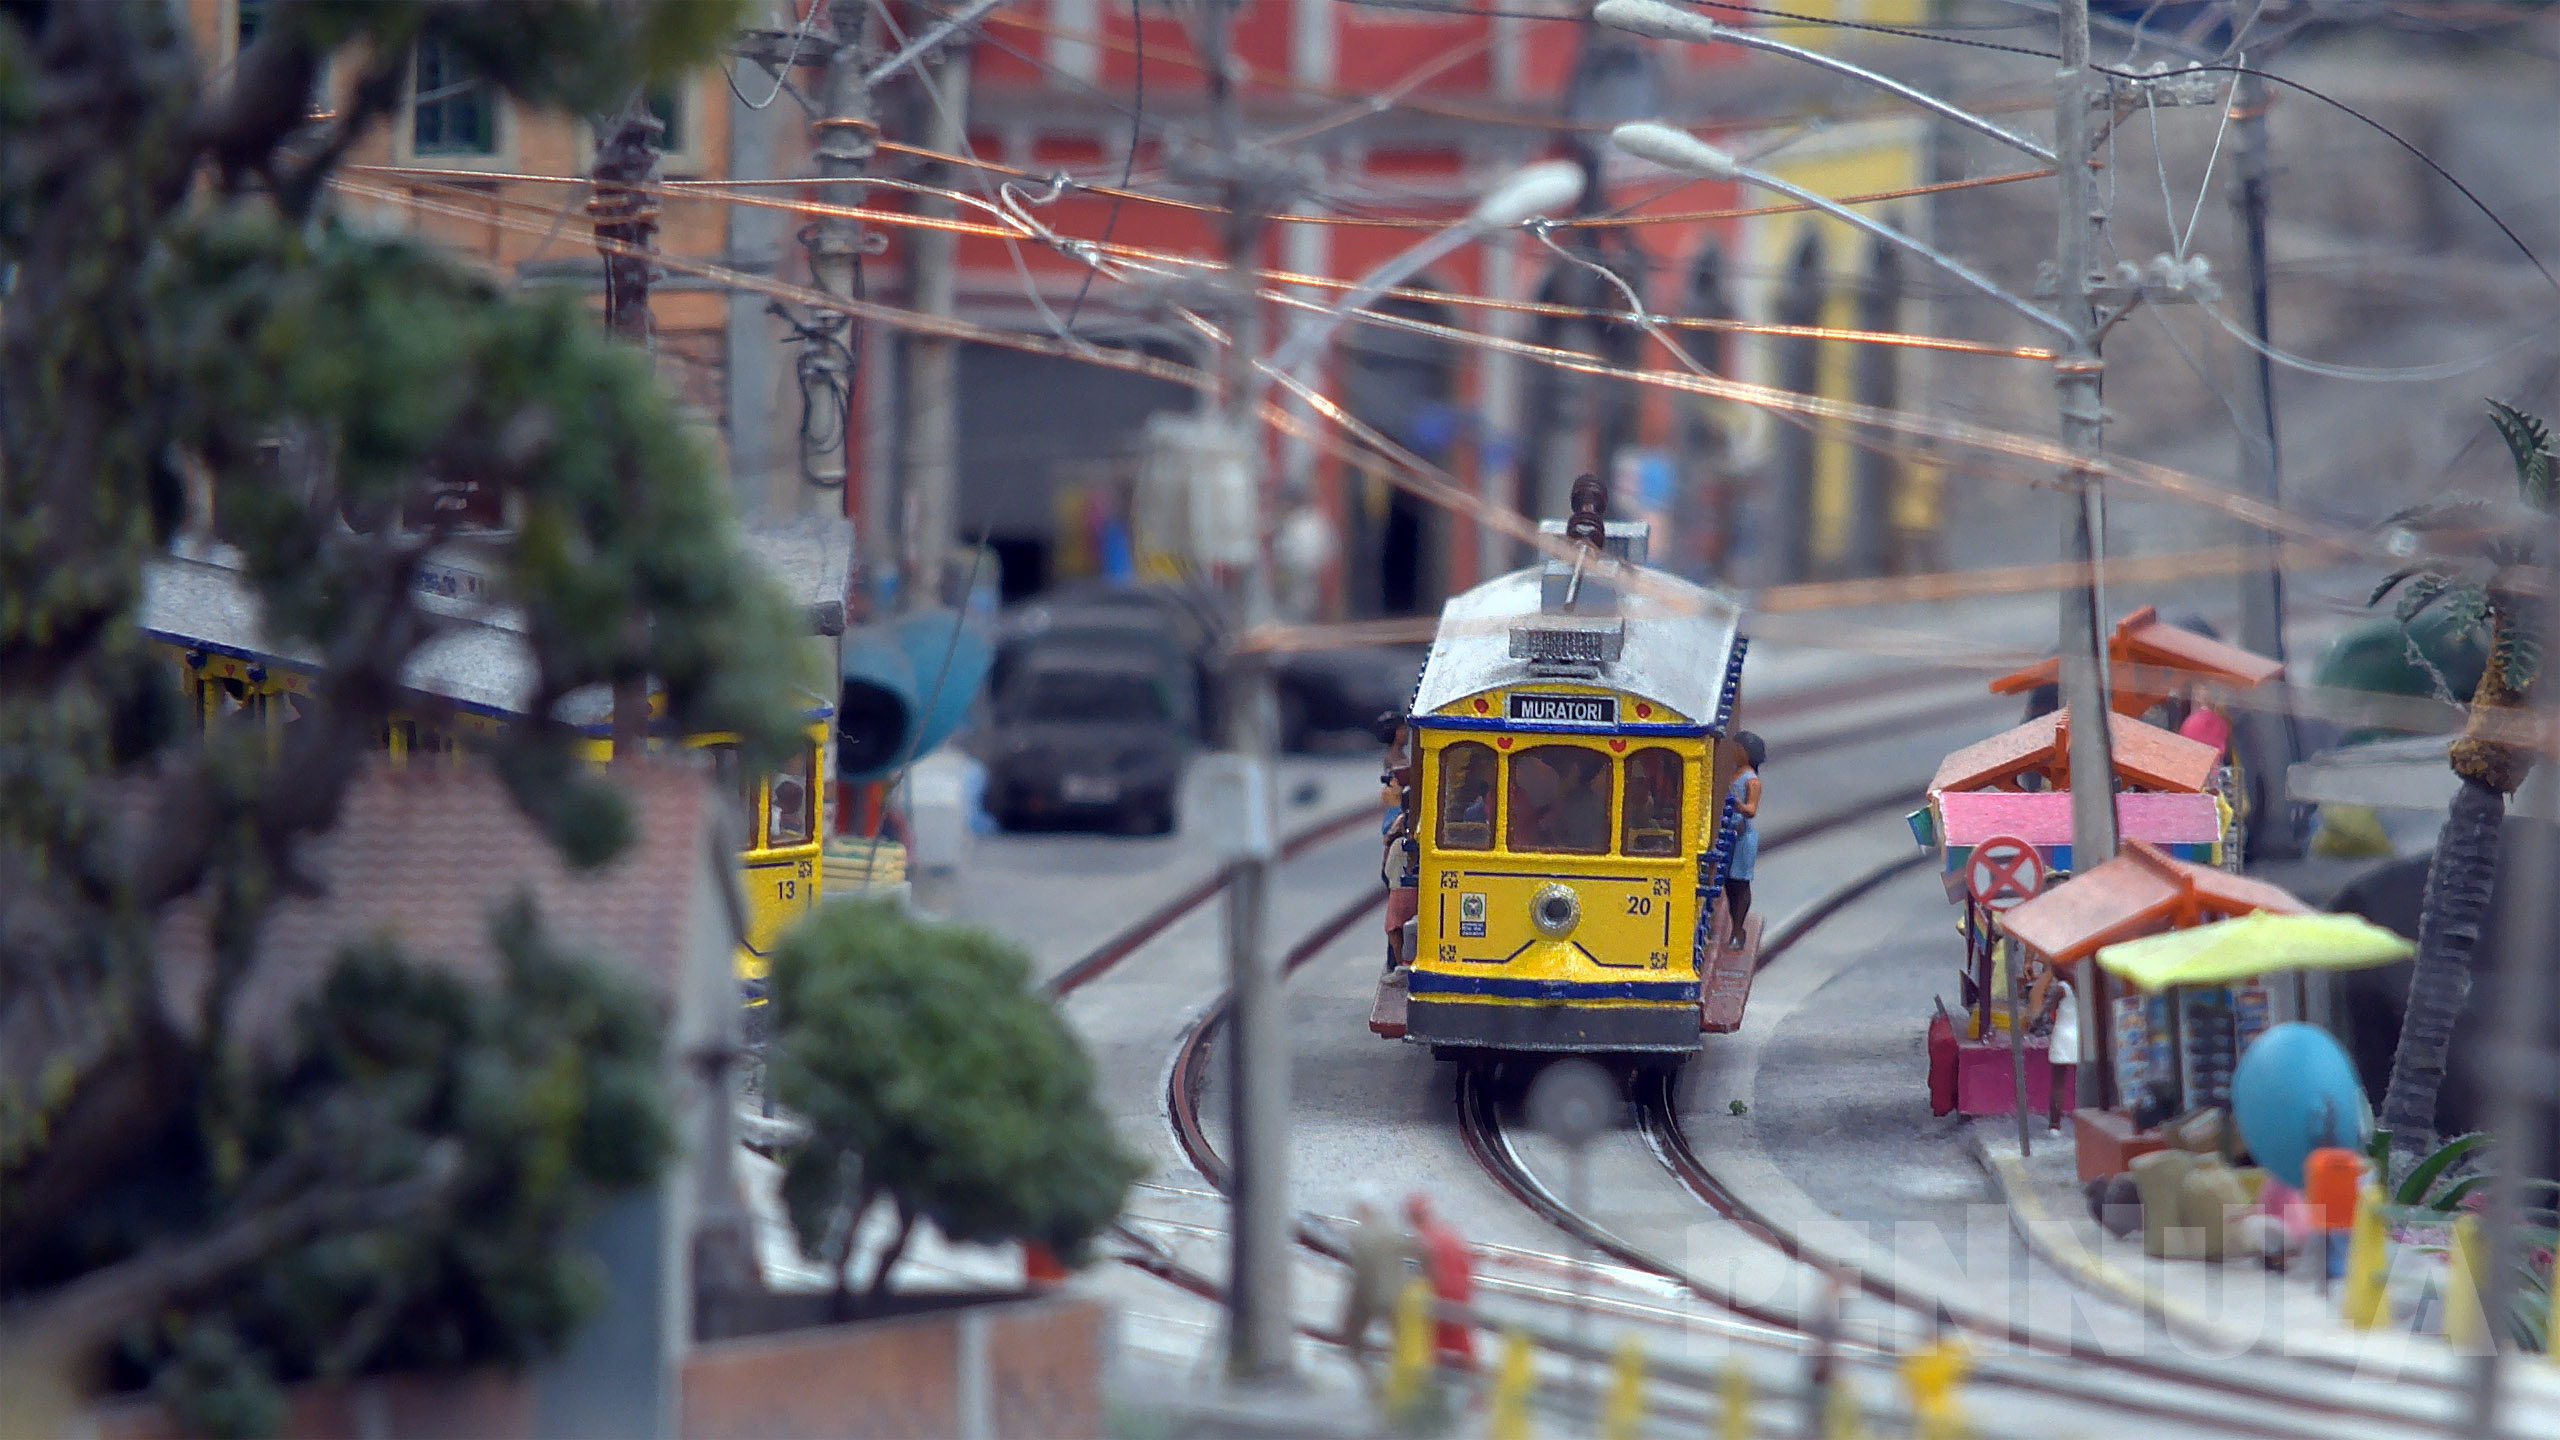 Miniatur Wunderland Modellbahn - Die Modellstraßenbahn H0 von Santa Teresa in Rio de Janeiro